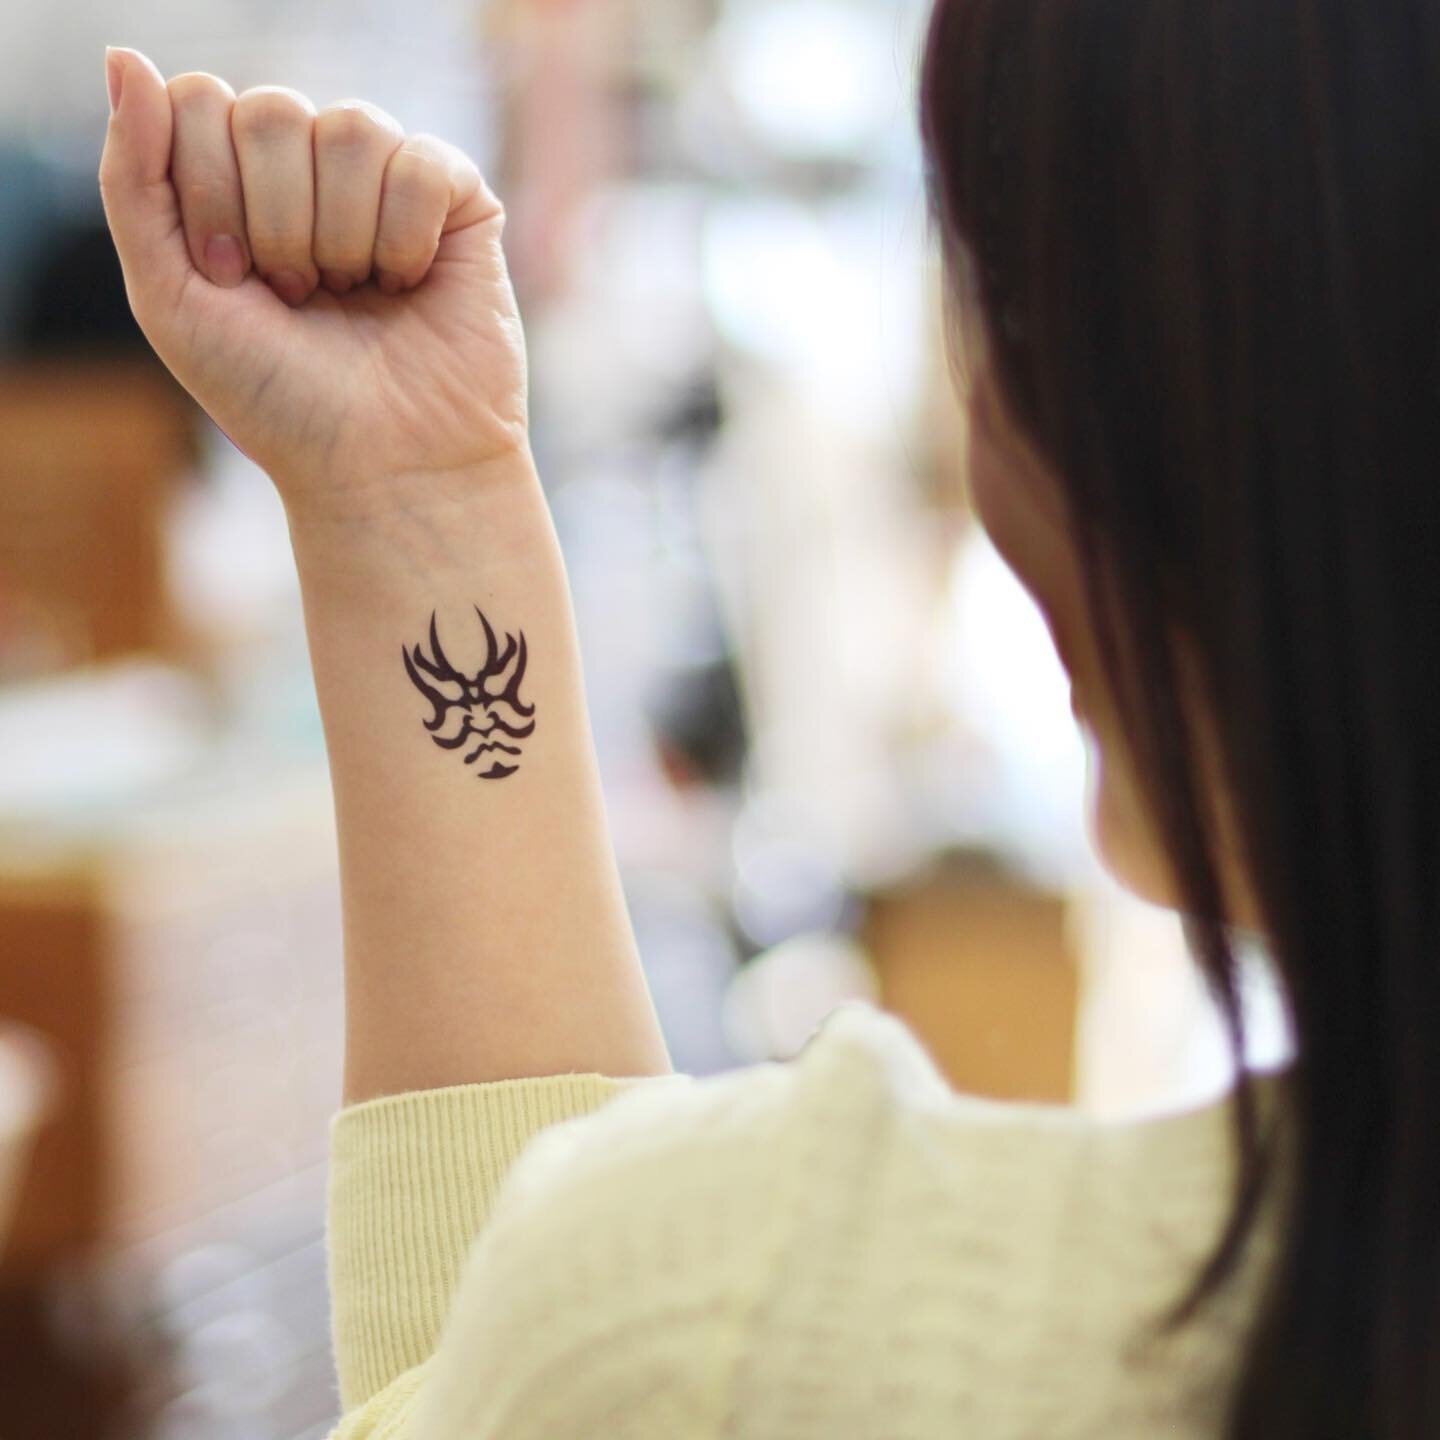 Write a caption... #tattoosticker #japaneseart #japan #wearableart #timelessdesign #kabukitattoo #kumadori #タトゥー #タトゥーシール #着るアート#歌舞伎タトゥー #日本文化 #日本好き #ロードアイランド #タイムレスデザイン #時間の足りないデザイン事務所